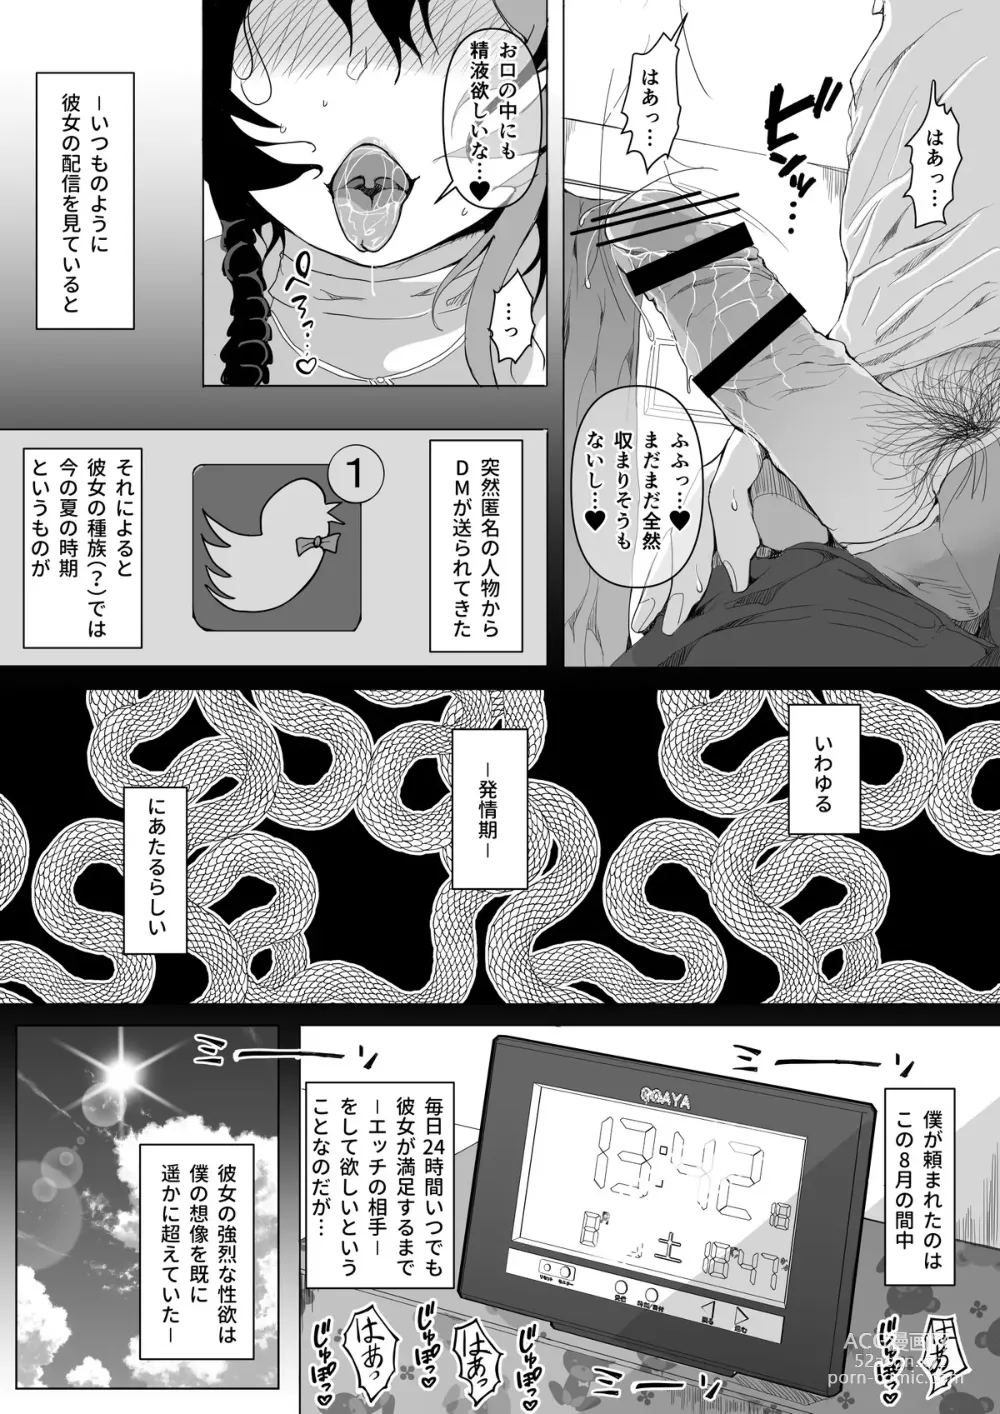 Page 3 of doujinshi 2022/08-2023/10月まで Fanboxで投稿をさせて頂きましたイラストになります。